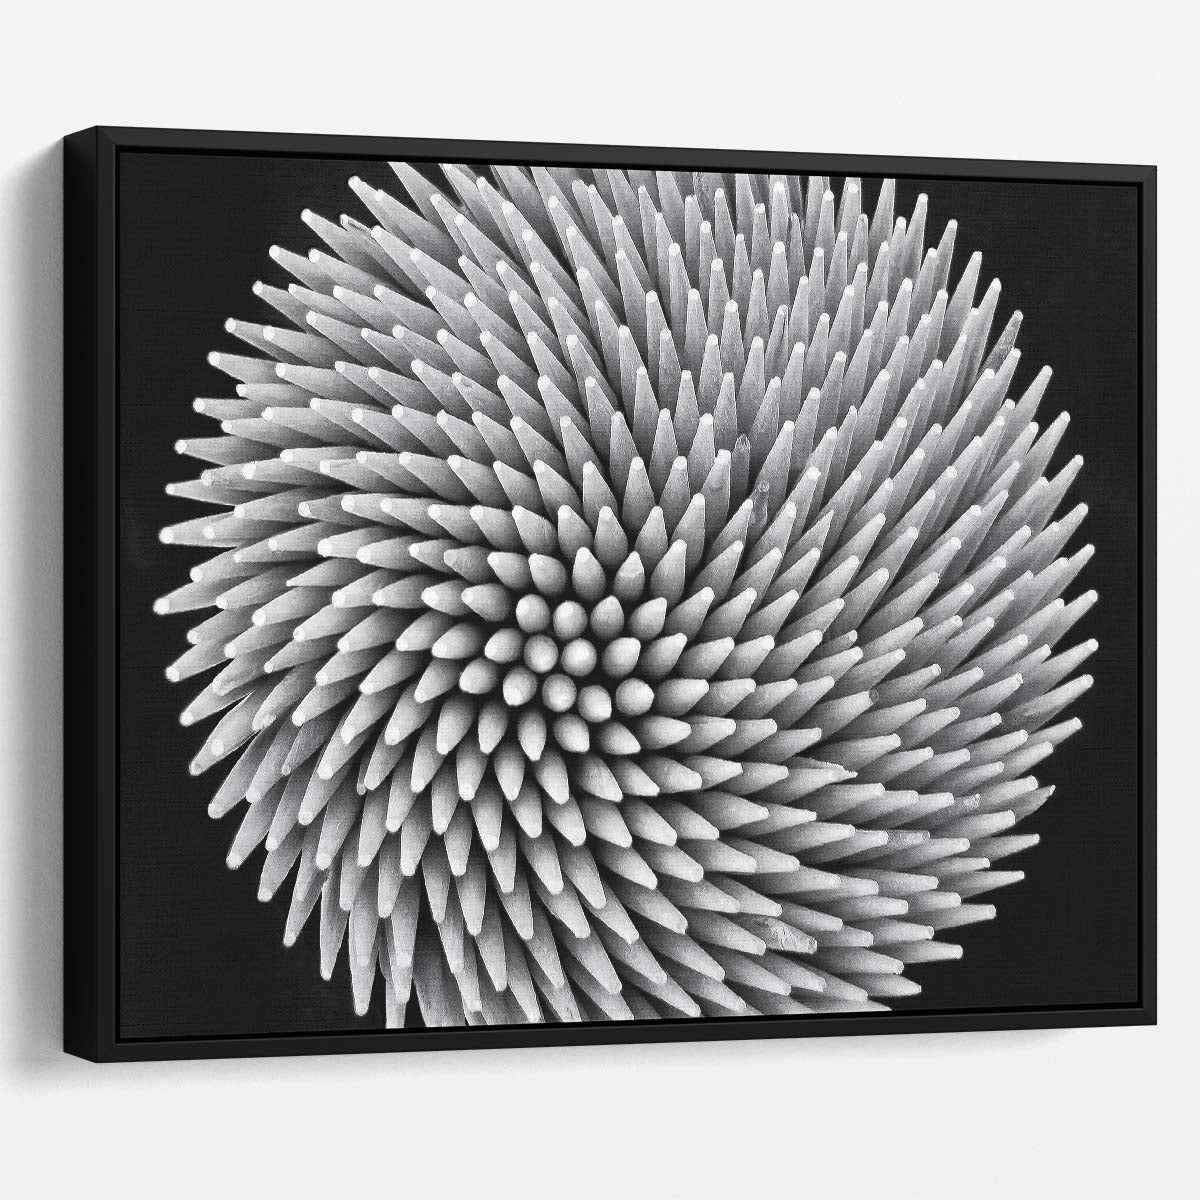 Geometric Sphere & Fibonacci Pattern Monochrome Wall Art by Luxuriance Designs. Made in USA.